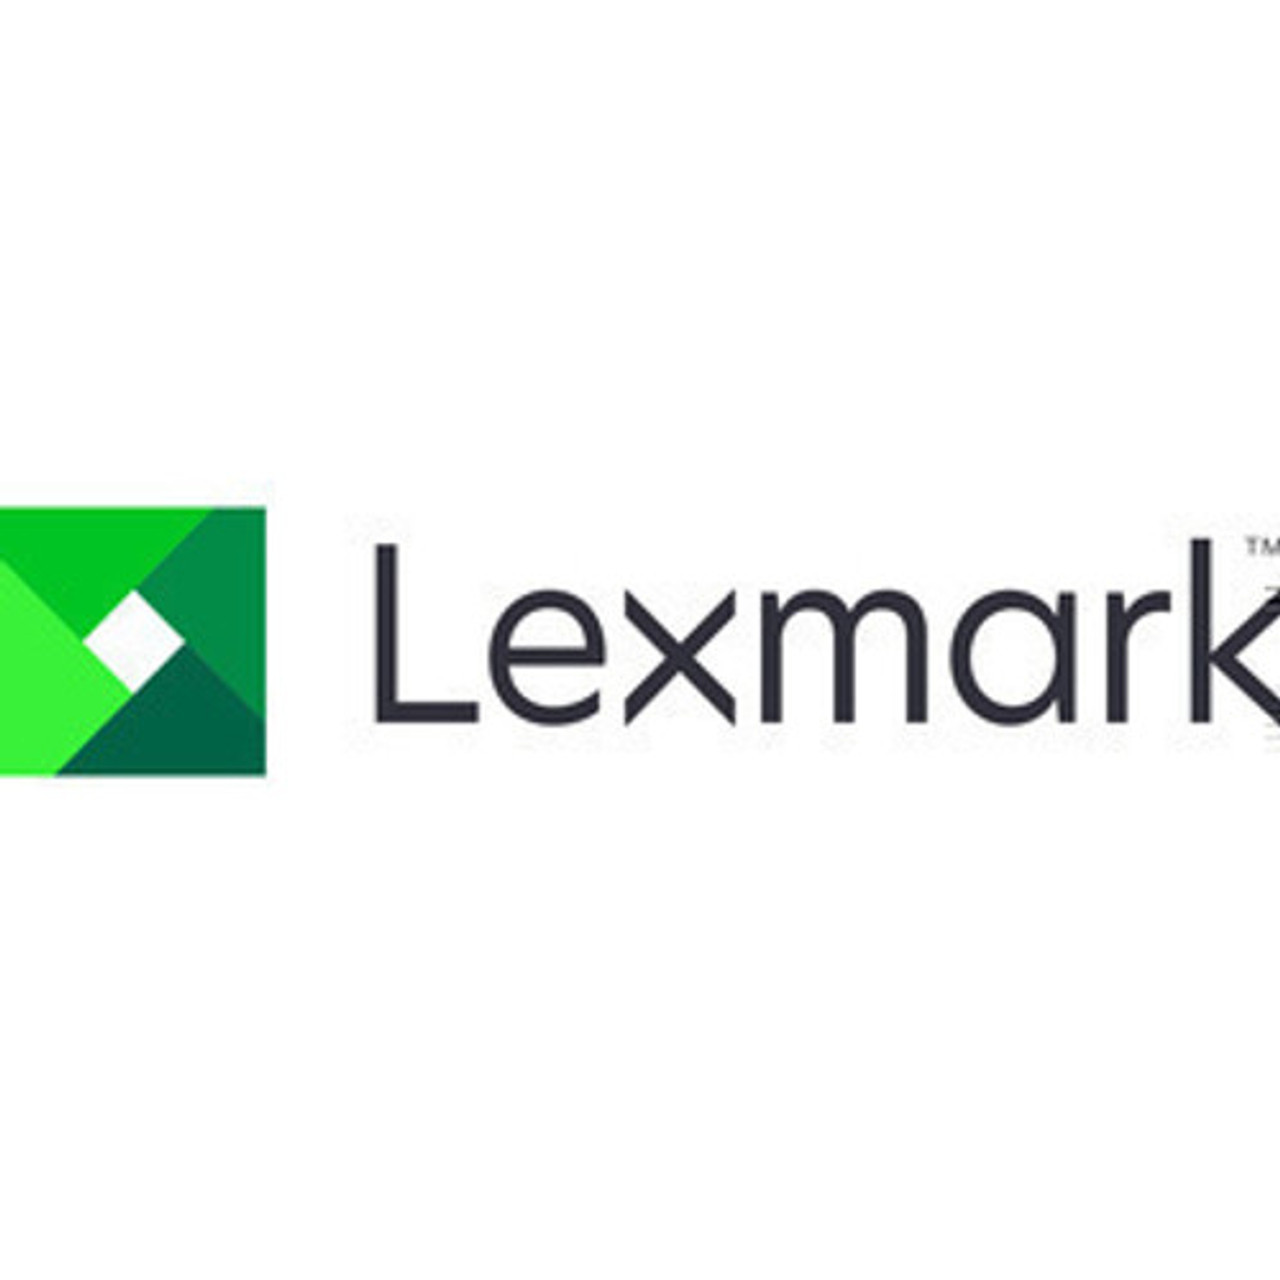 Lexmark 2YR RNWL ADVANCED EXCHANGE  SVCSMS631 - 2374795